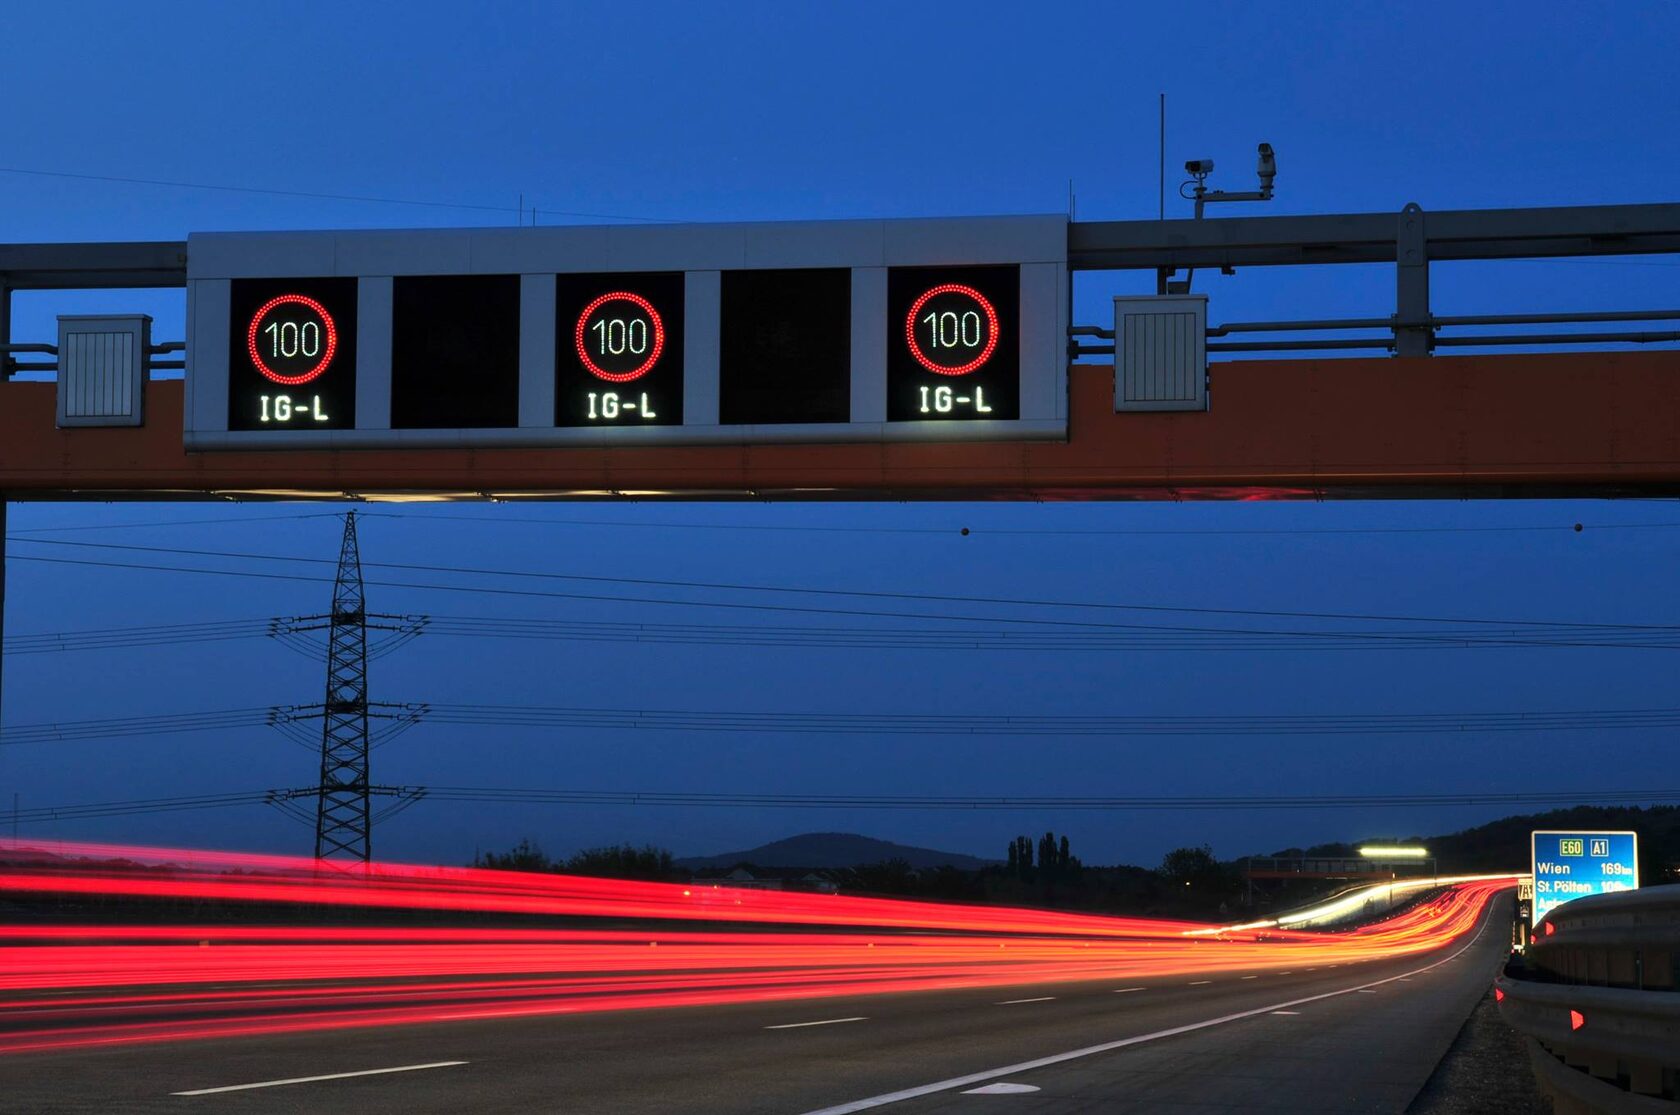 IG-L speed regulation traffic sign on austrian highway